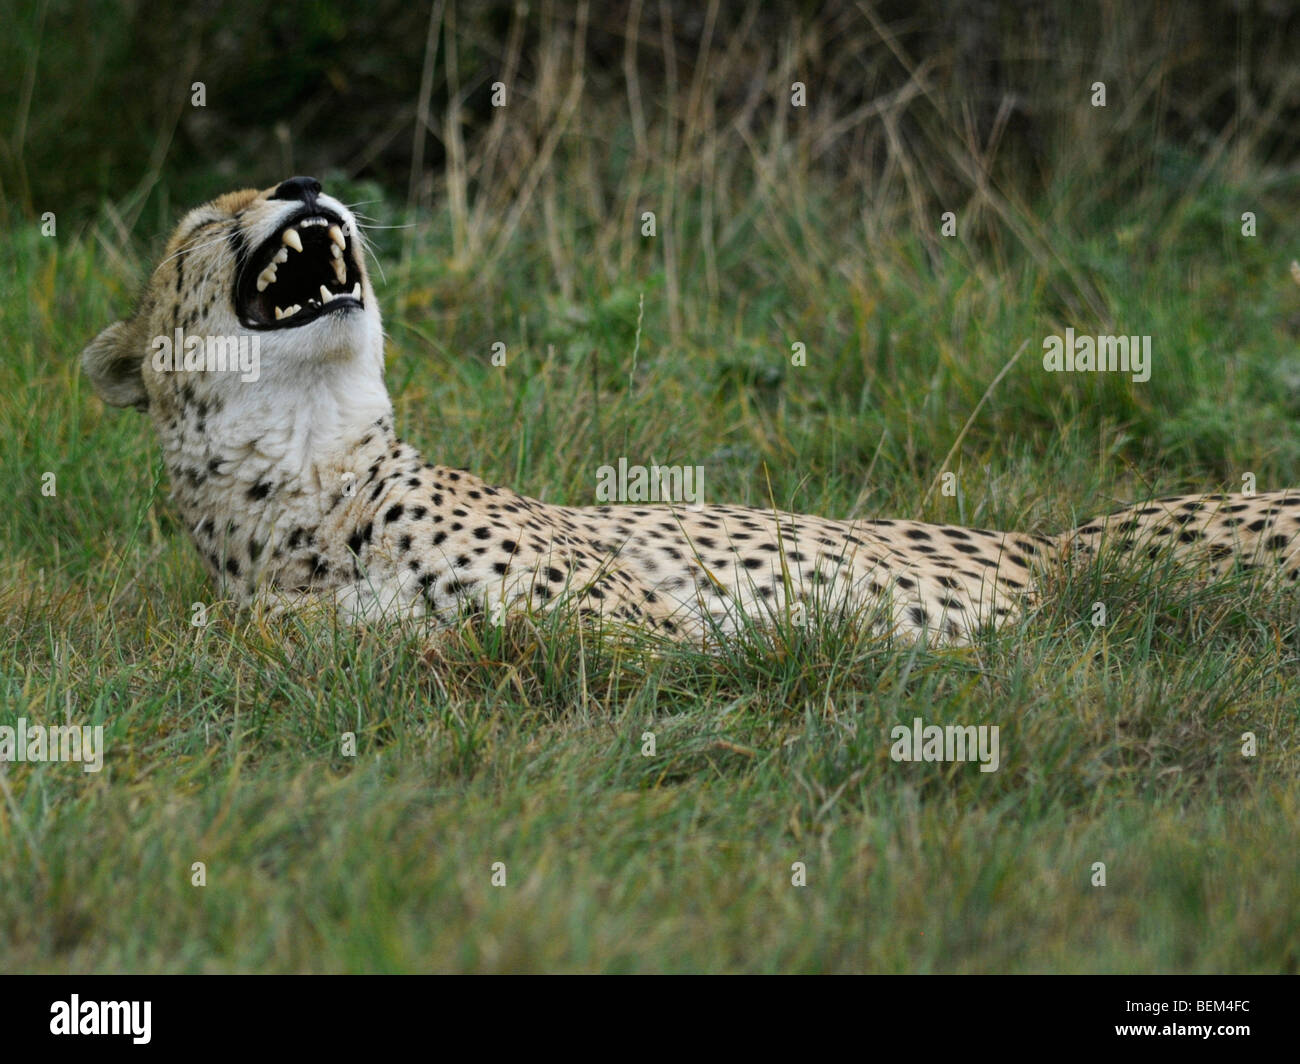 A cheetah laughing ` having fun. Stock Photo